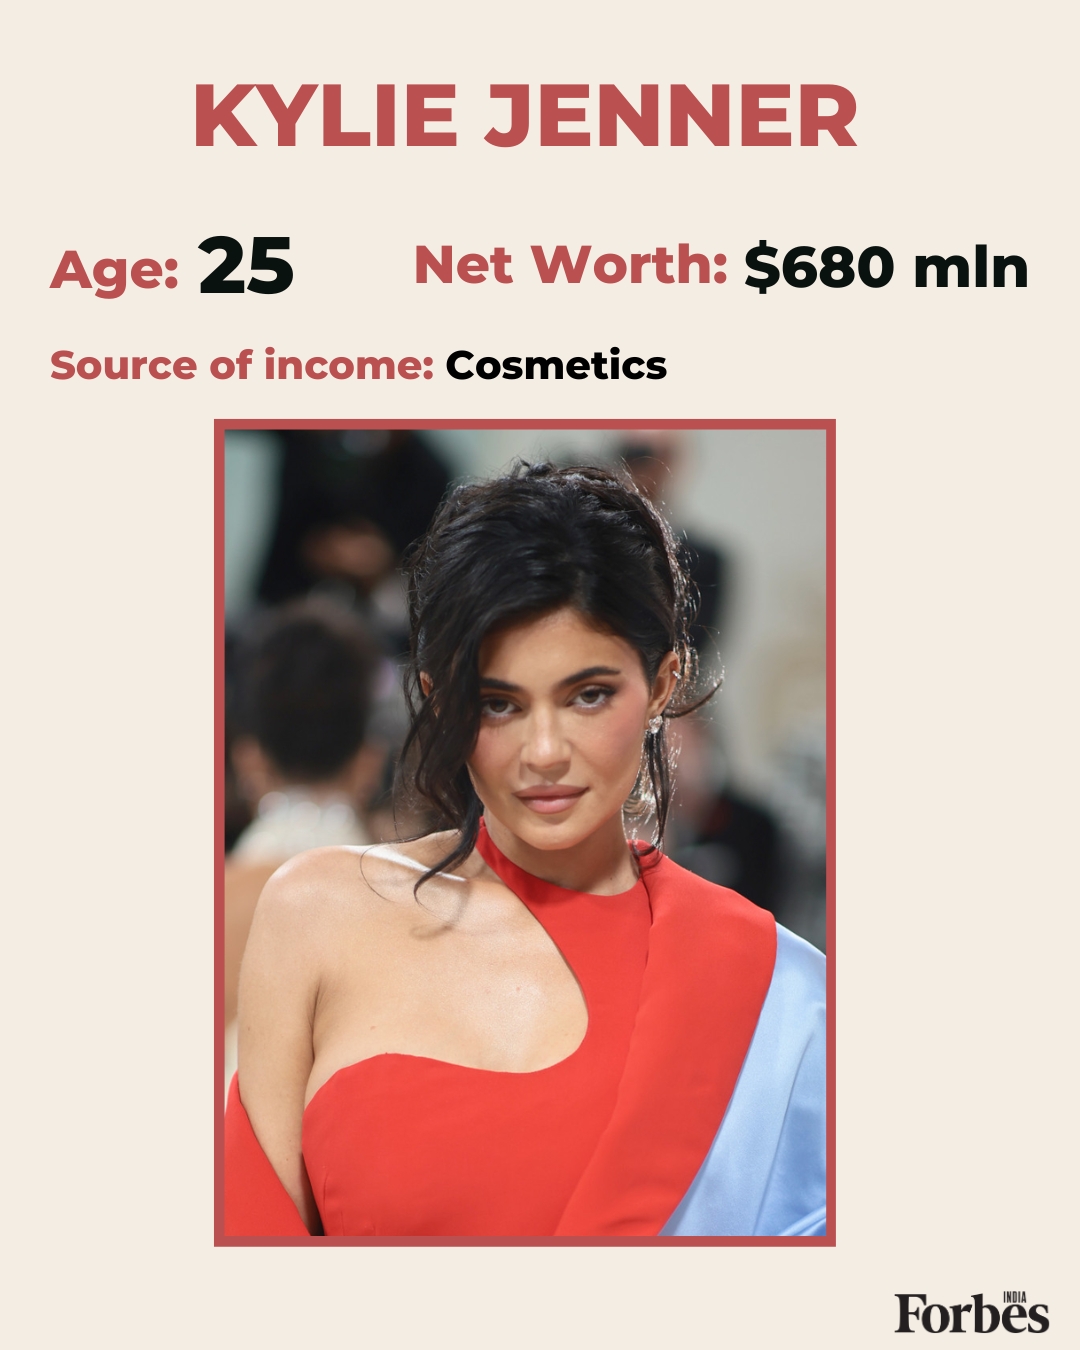 Taylor Swift, Rihanna among America's richest self-made women under 40